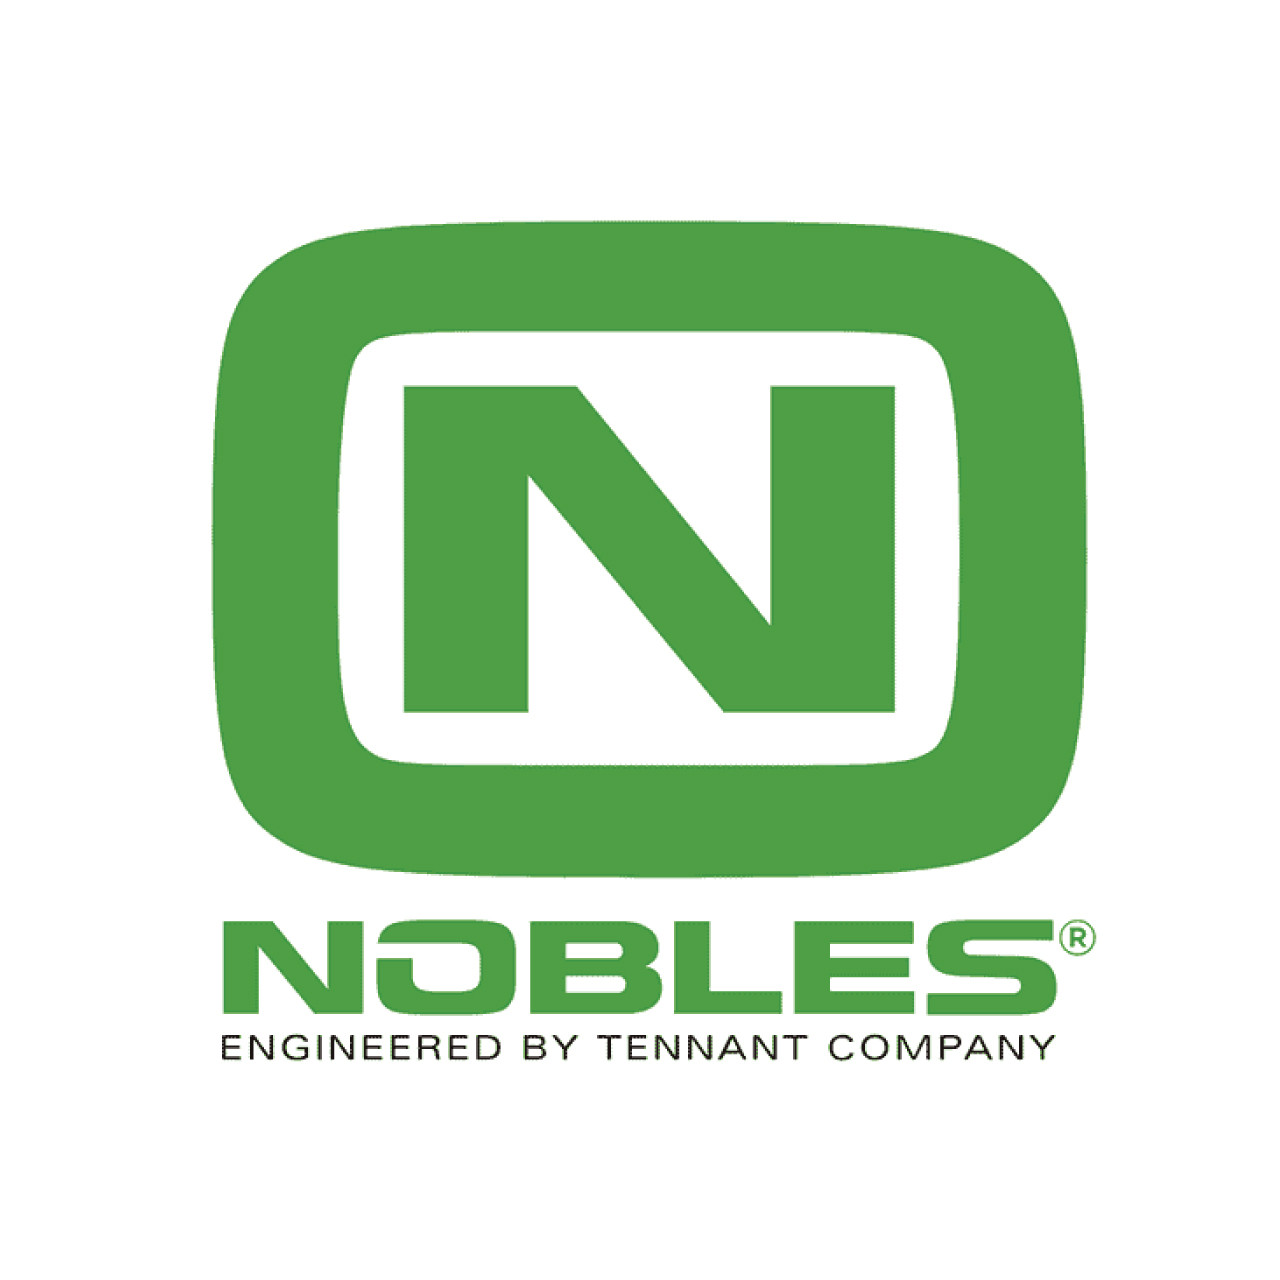 Nobles 1022148 BRACKET, MTG, MANIFOLD, SOLTN pic